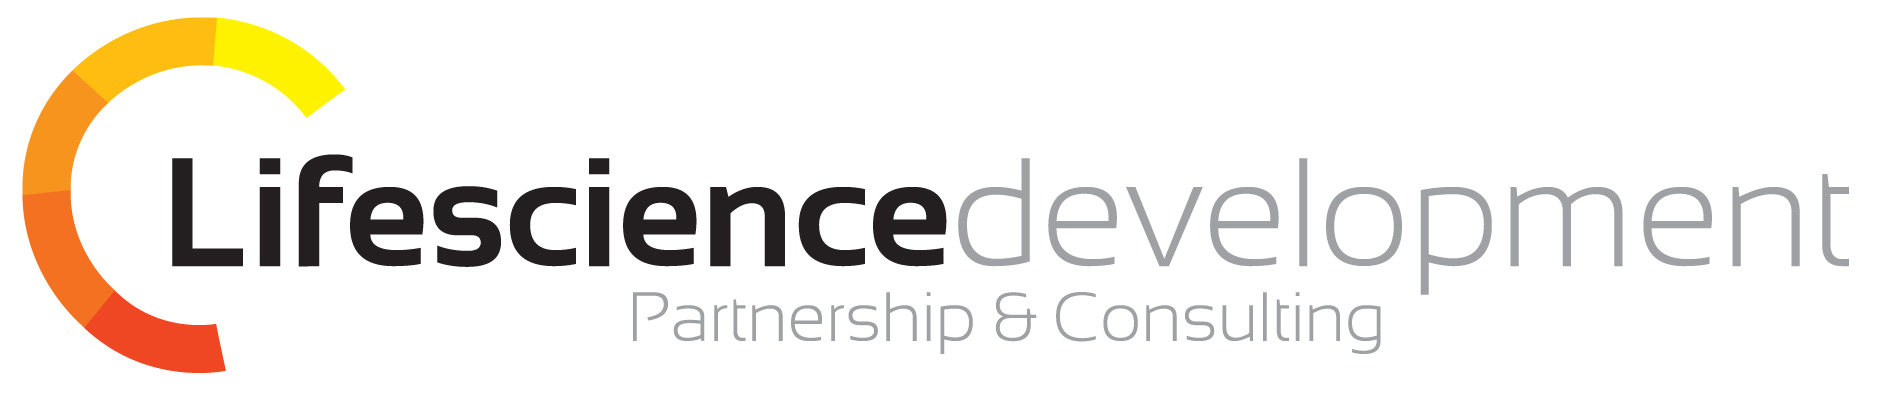 Lifescience Development Partnership & Consulting